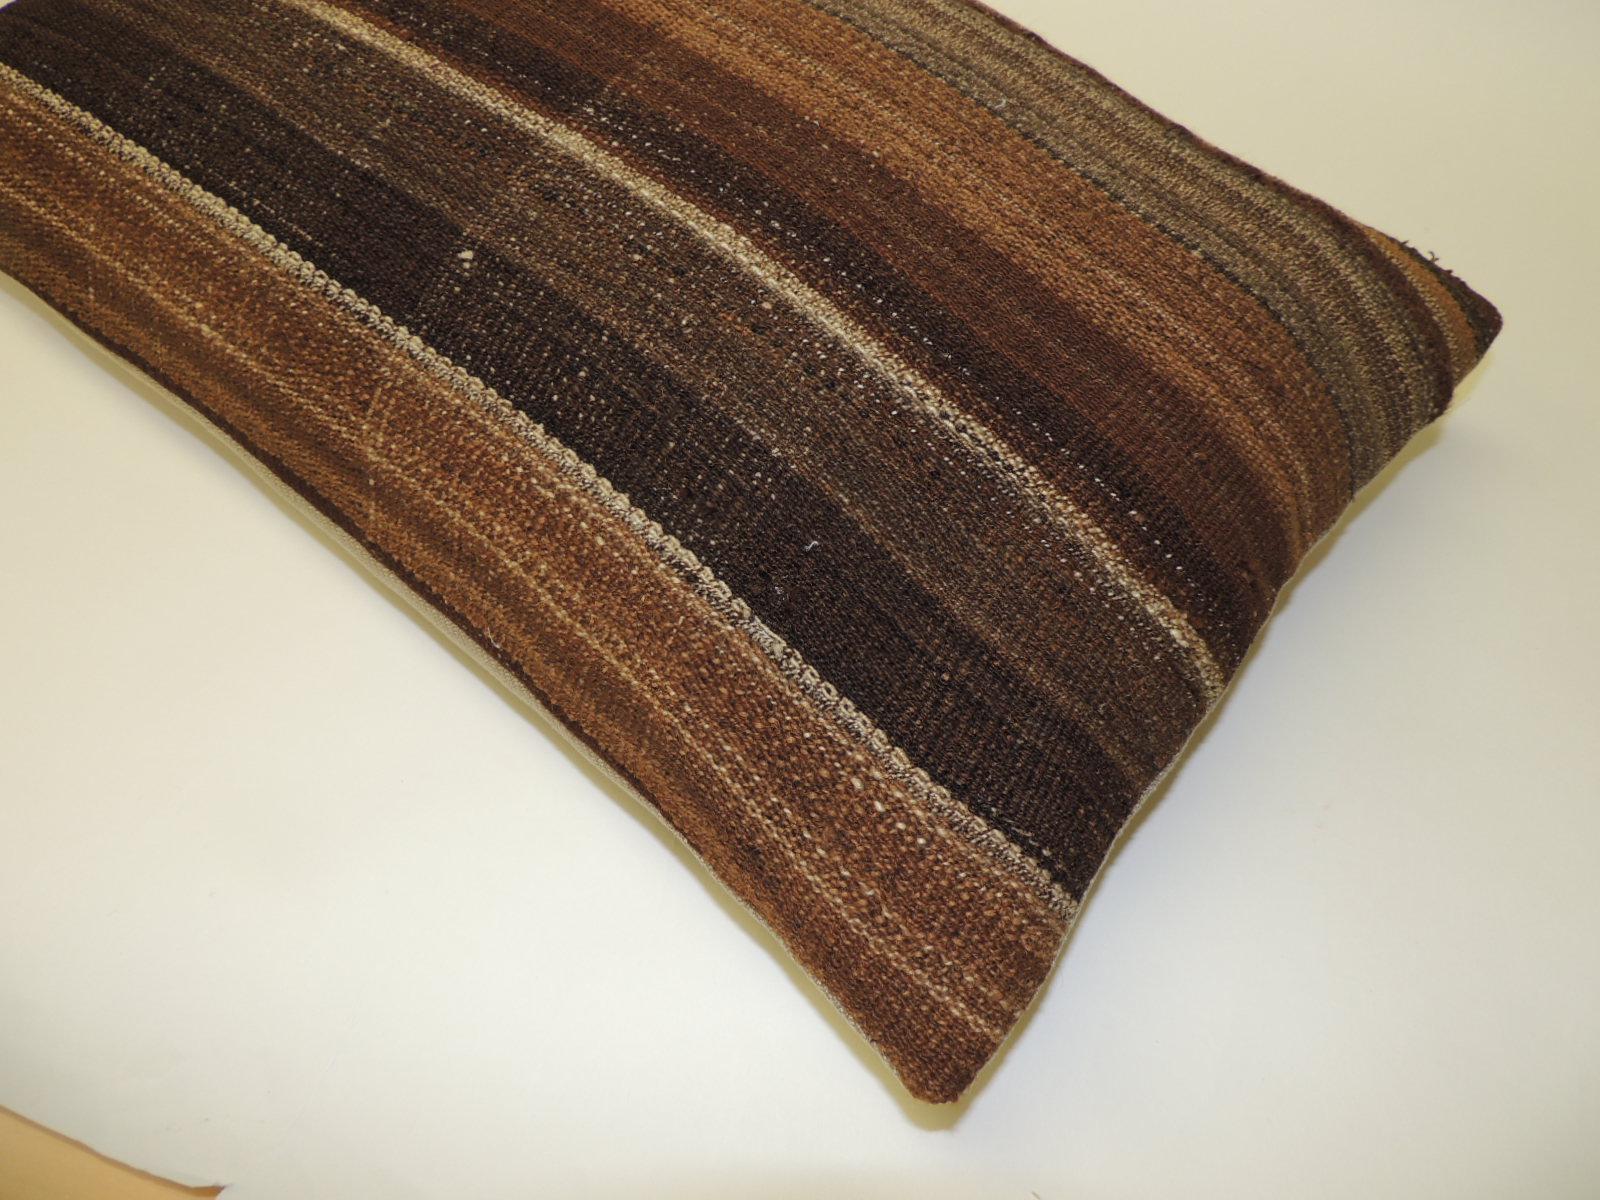 Brown woven Turkish grain sack stripe decorative bolster pillow.
Pillow is backed with tan woven linen. Zipper closure.
Size: 15 x 24 x 6.